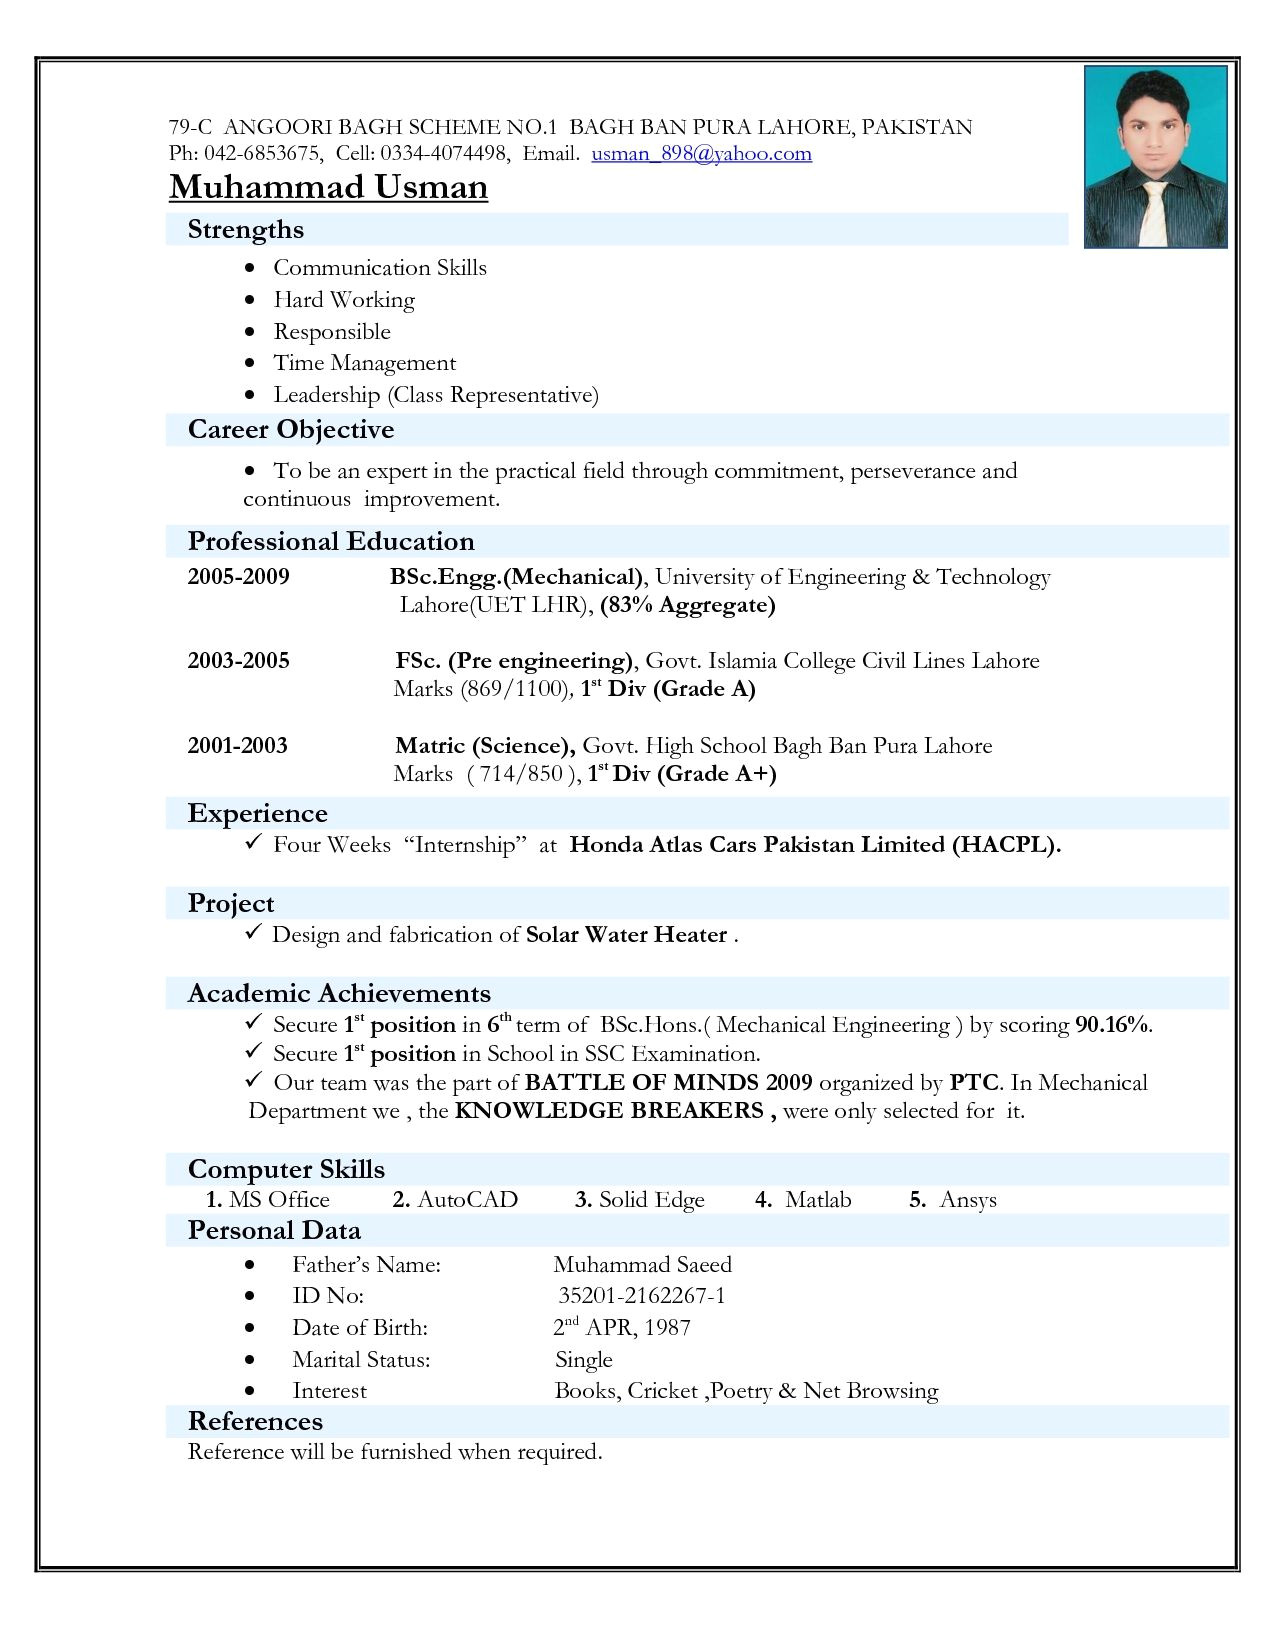 Resume format for Freshers Diploma Mechanical Engineers | williamson-ga.us